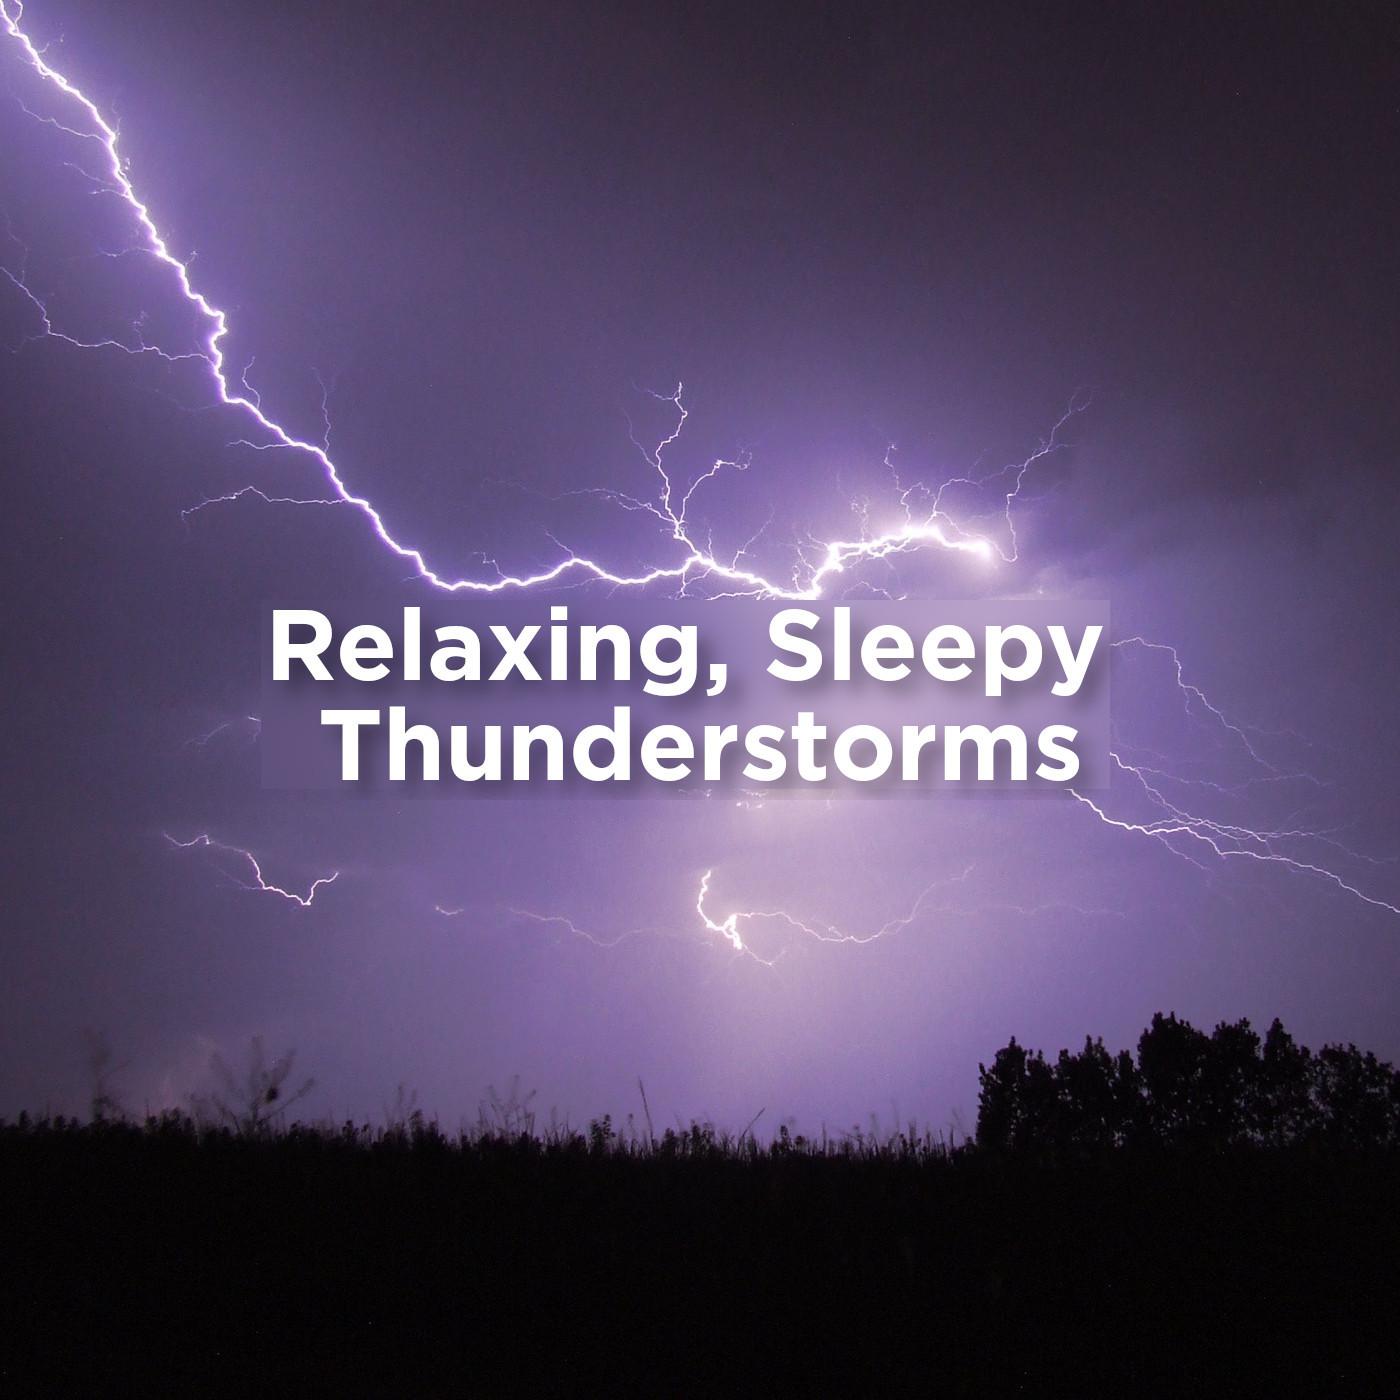 Relaxing Sleep Storm